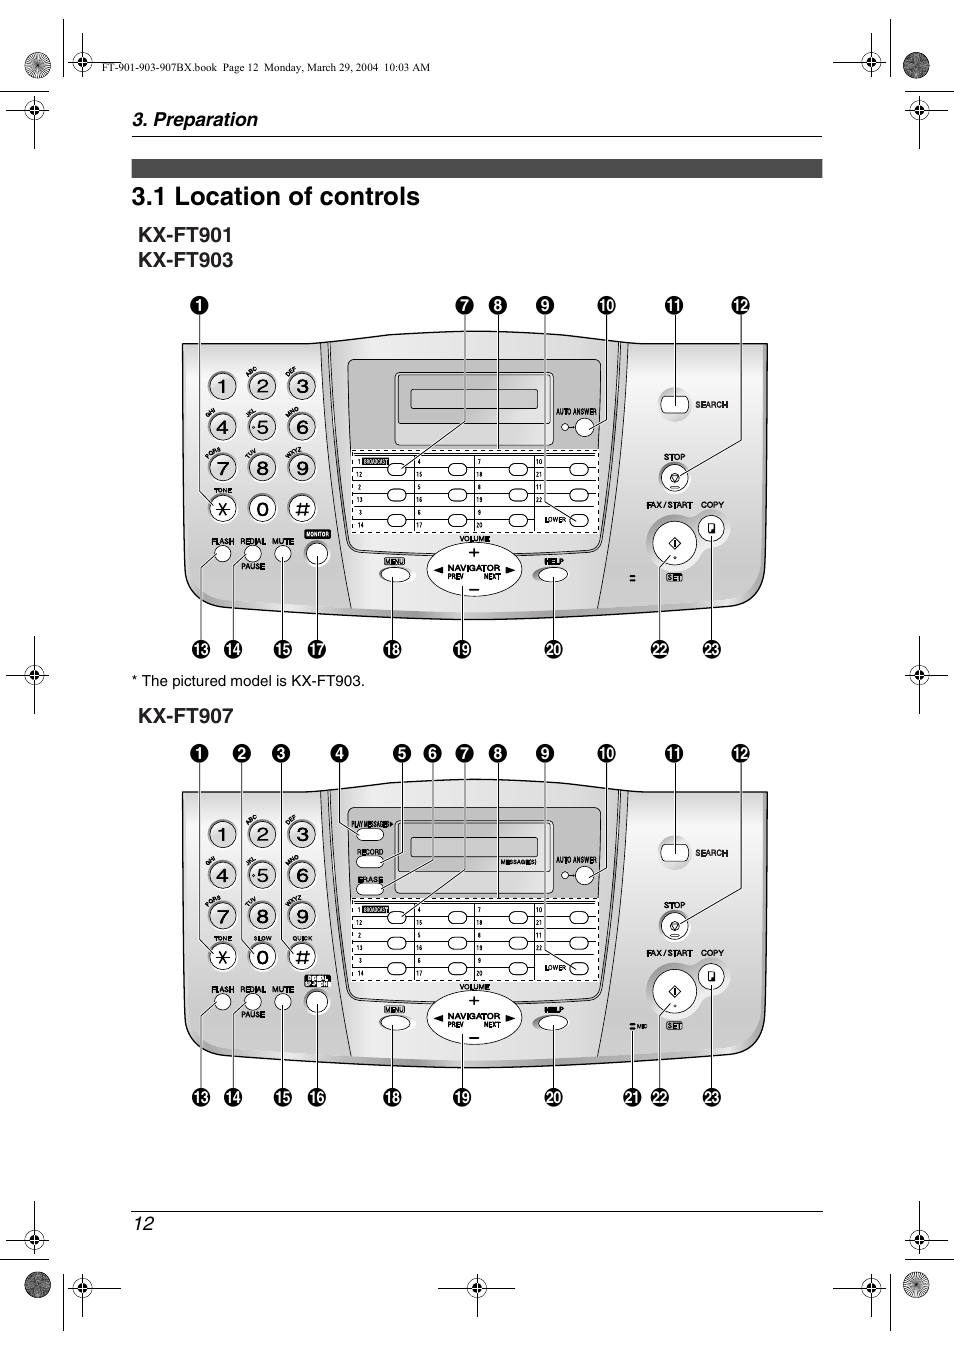 Preparation, 1 location of controls, Finding the controls | Location of controls, 1 location of controls | Panasonic KX-FT901BX User Manual | Page 12 / 64